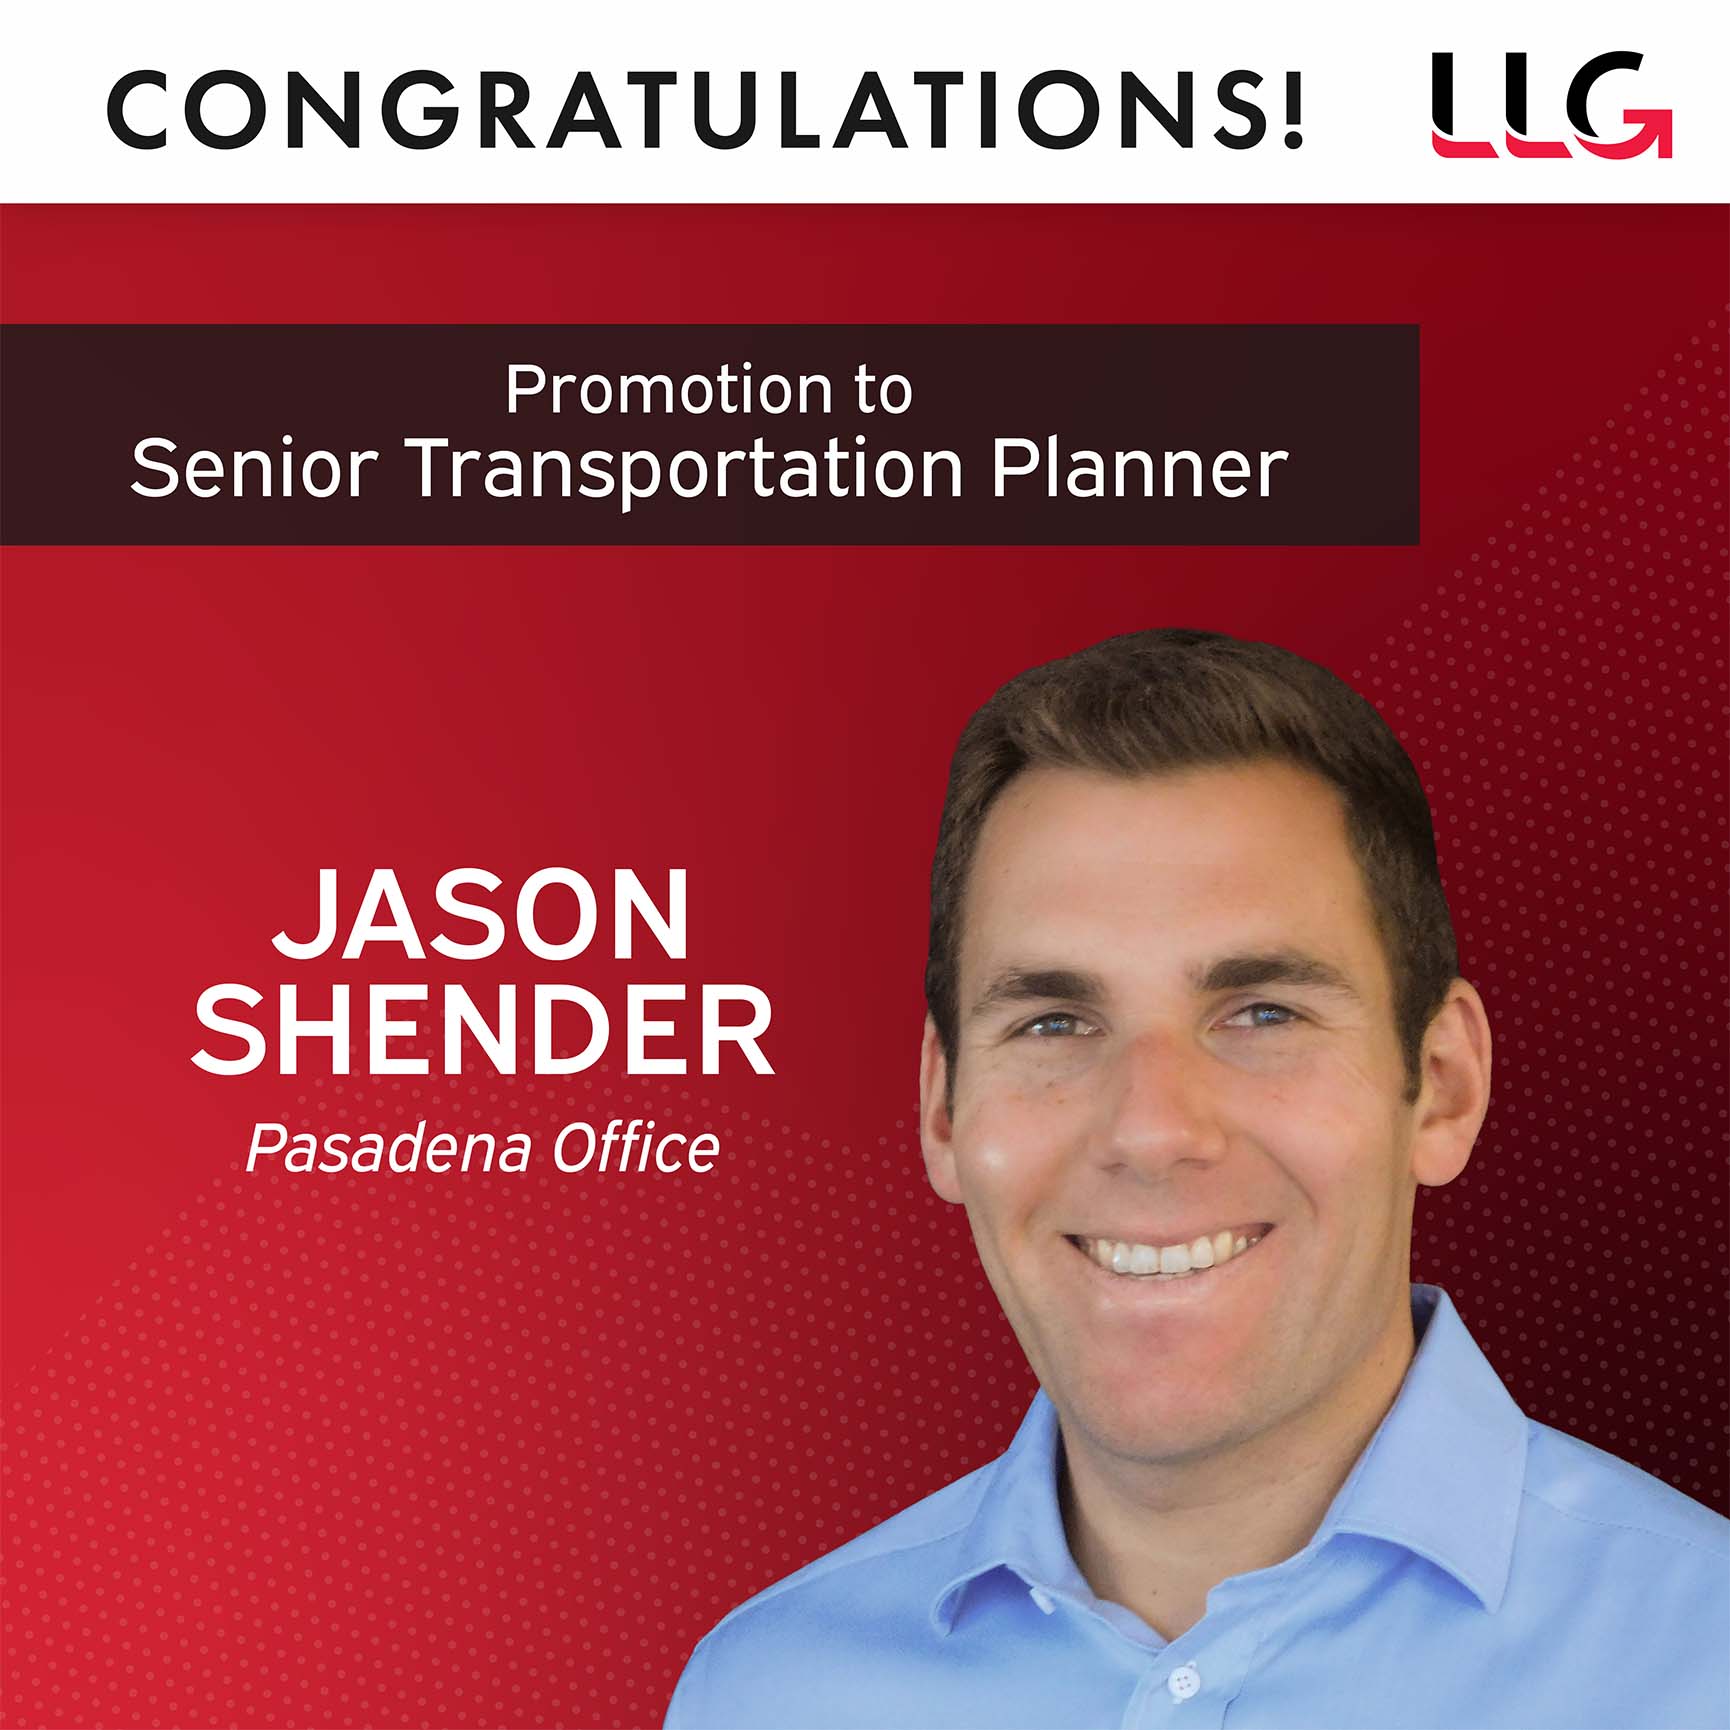 Jason Shender - Promotion to Senior Transportation Planner